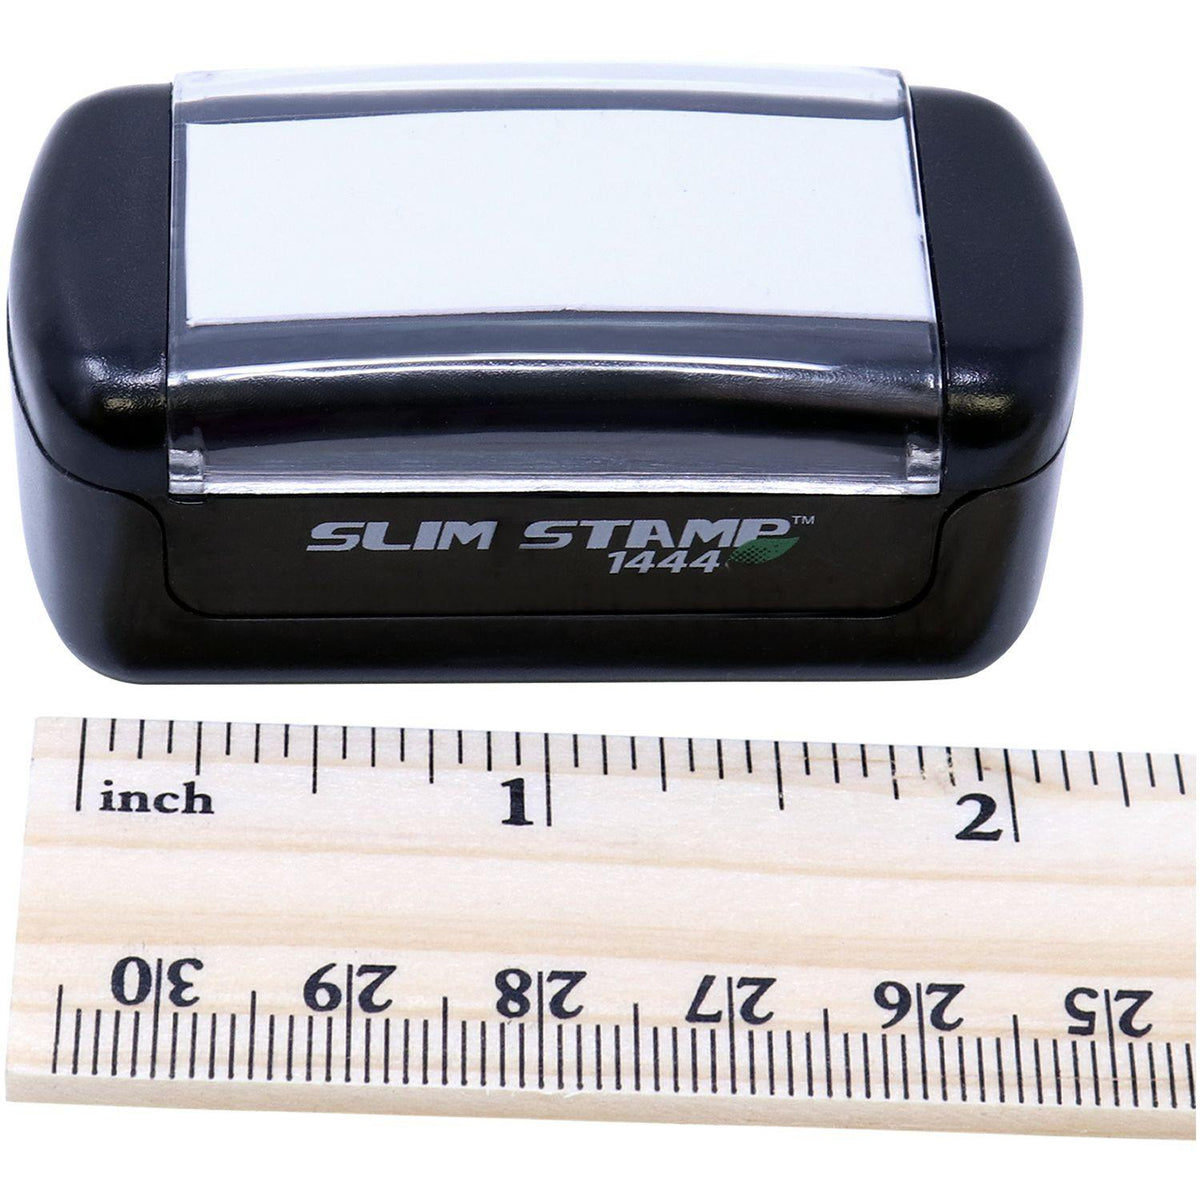 Measurement Slim Pre-Inked Fax Memo Stamp with Ruler